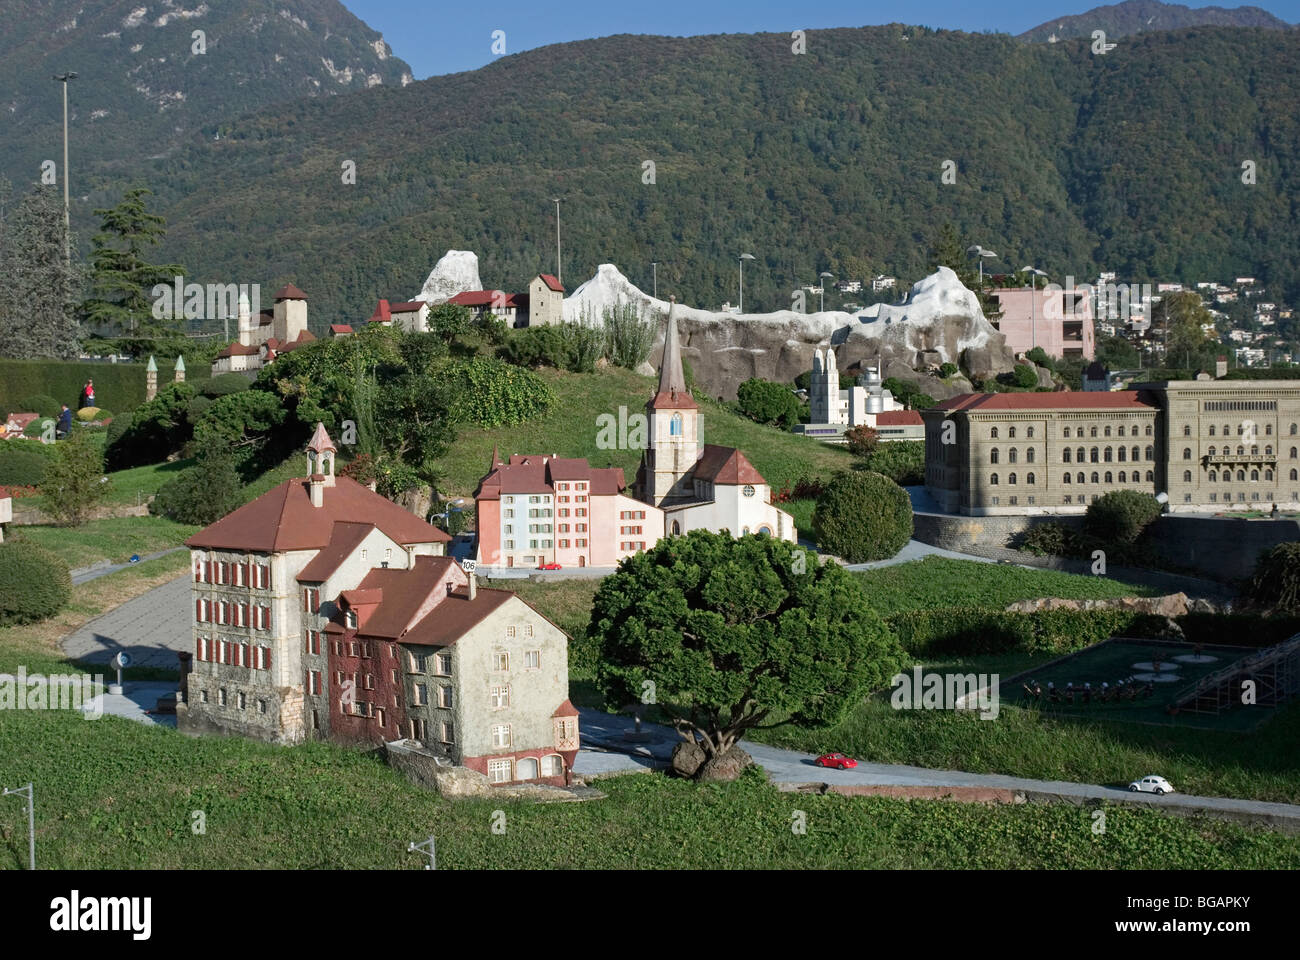 Switzerland, Ticino, Lake Lugano, Melide, Swissminiatur, Miniature Switzerland model theme park, Stock Photo